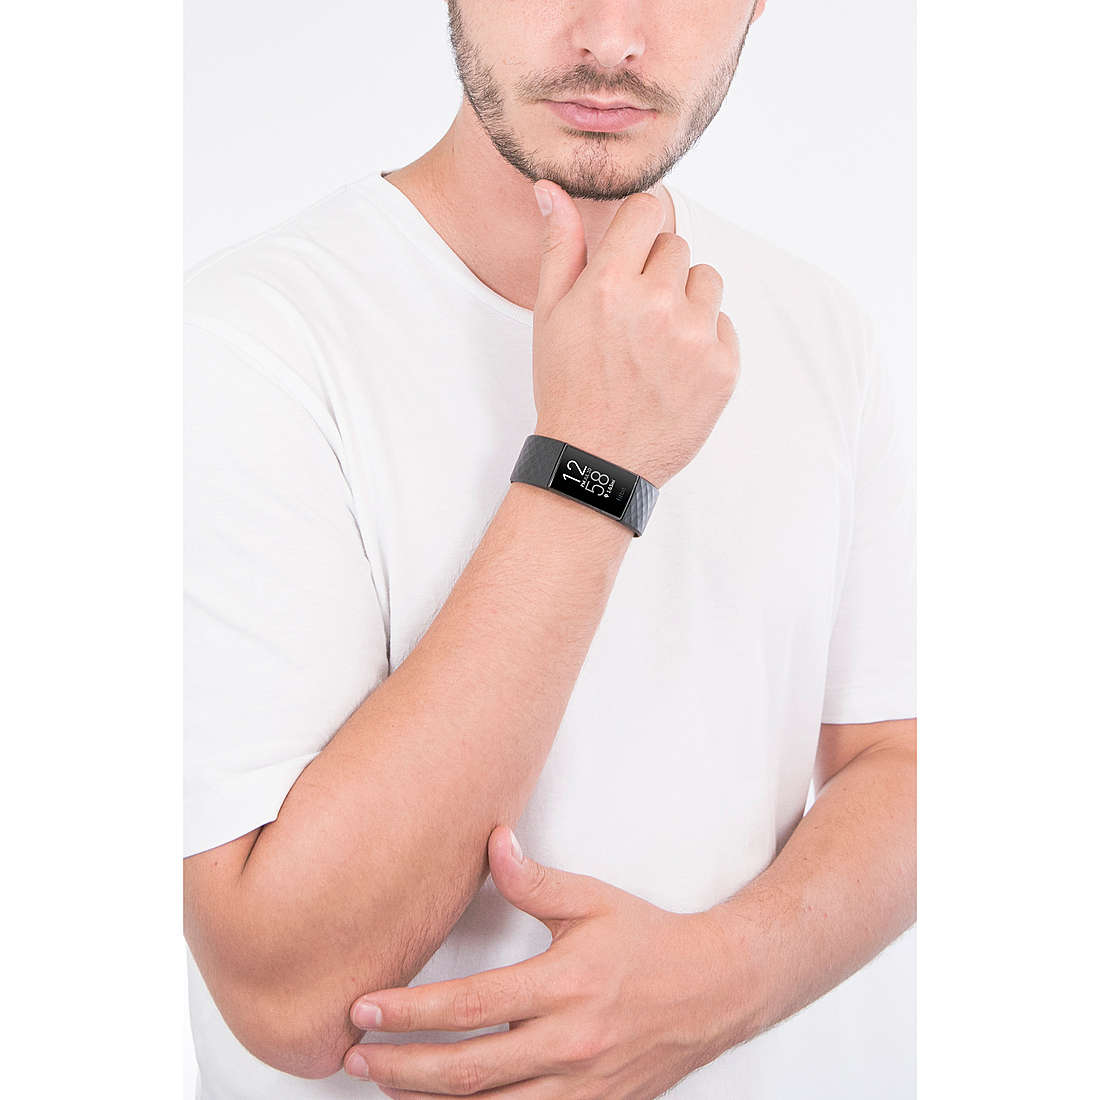 Fitbit digitals Charge man FB417BKBK wearing